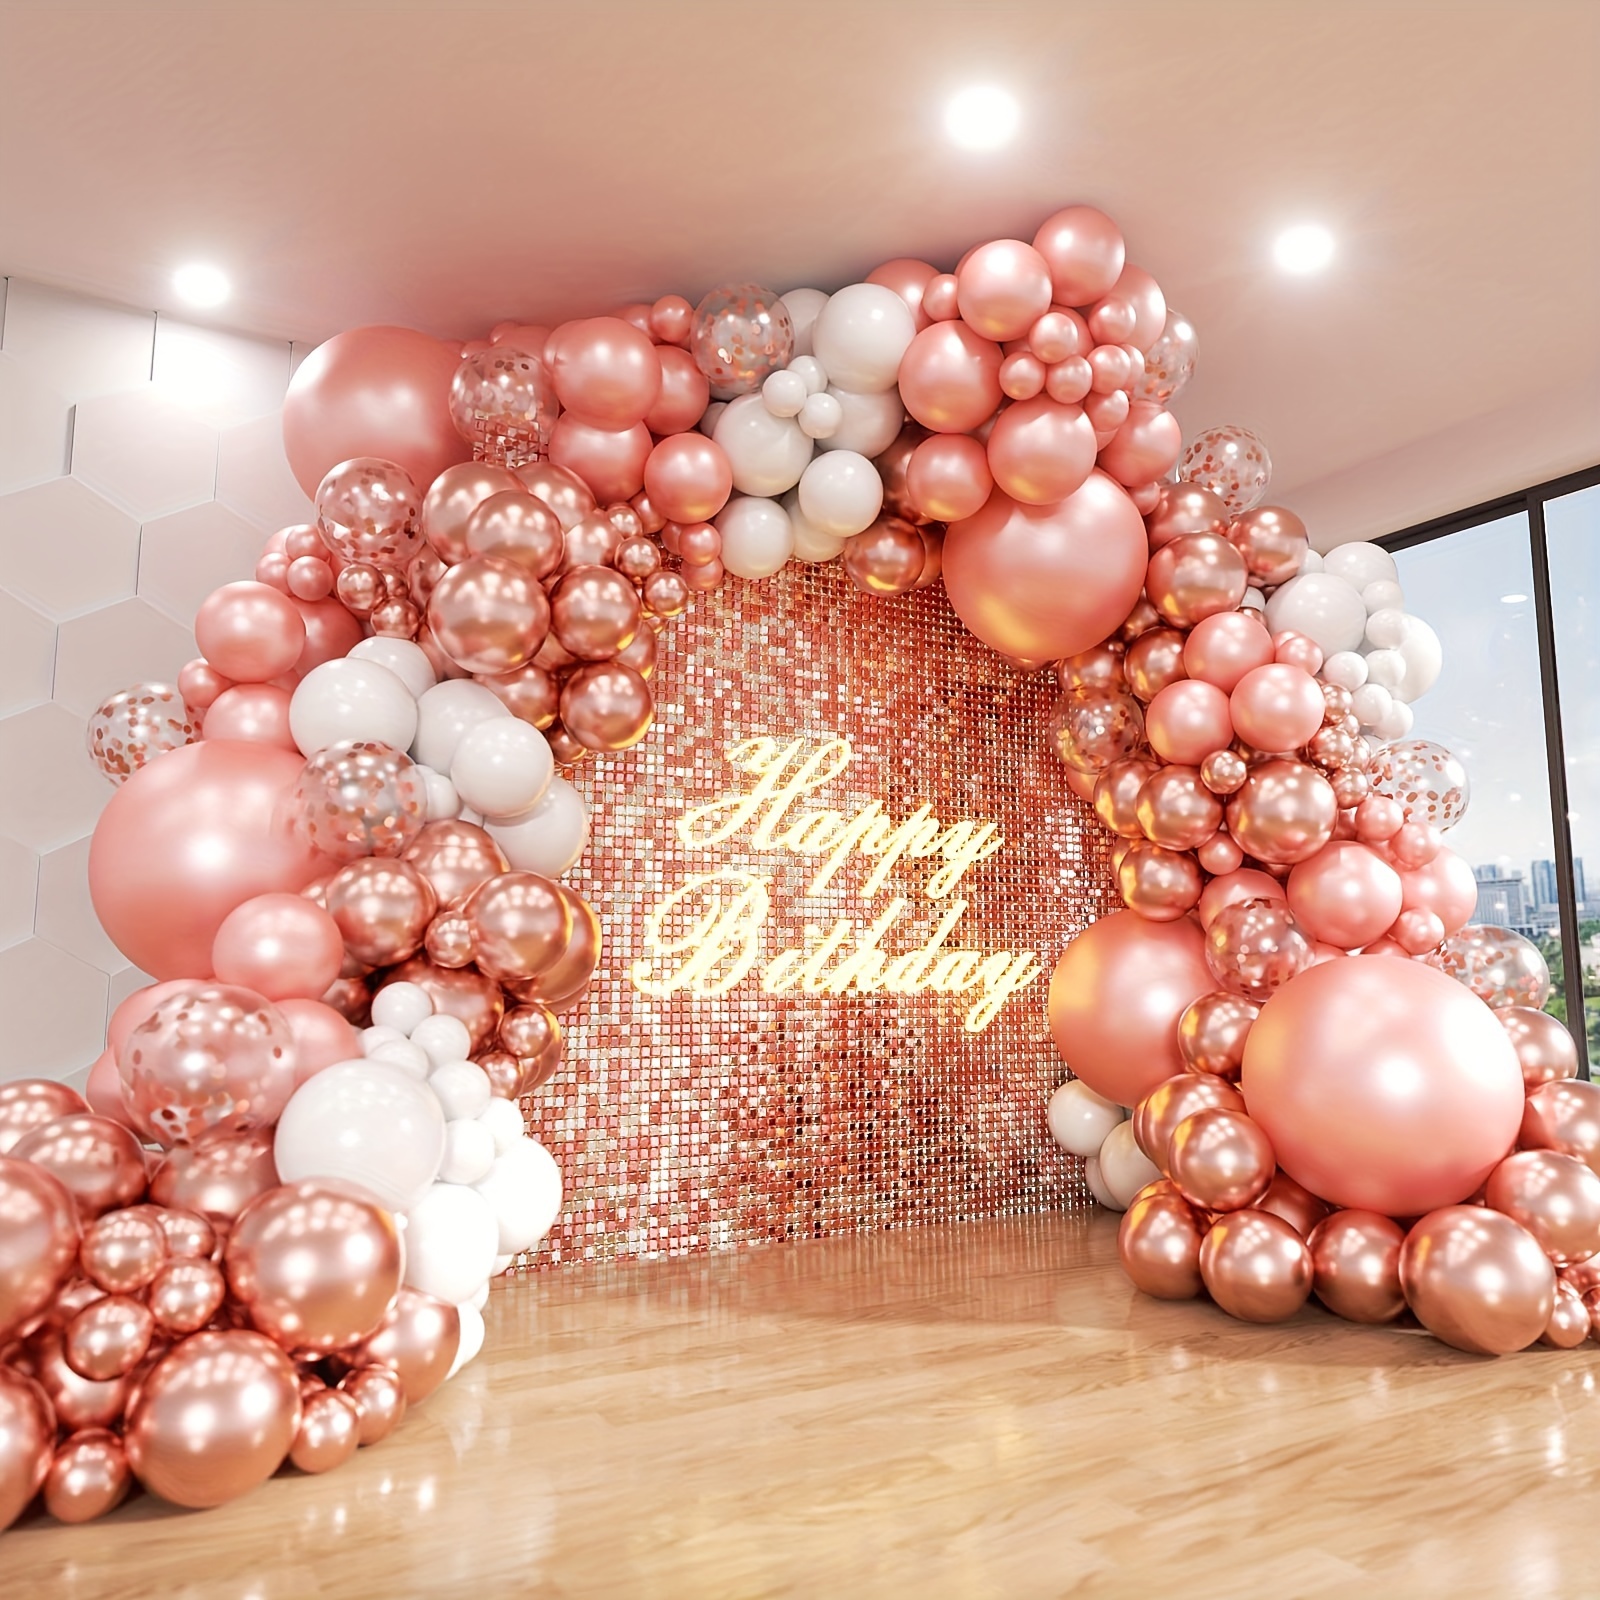 

Rose & White Balloon Garland Kit - 124pcs Assorted Sizes 18", 12", 10", 5" For Birthday, Prom, Bachelorette, Gender Reveal, Engagement, Bridal Shower, Wedding, Valentine's Day, Anniversary Decorations